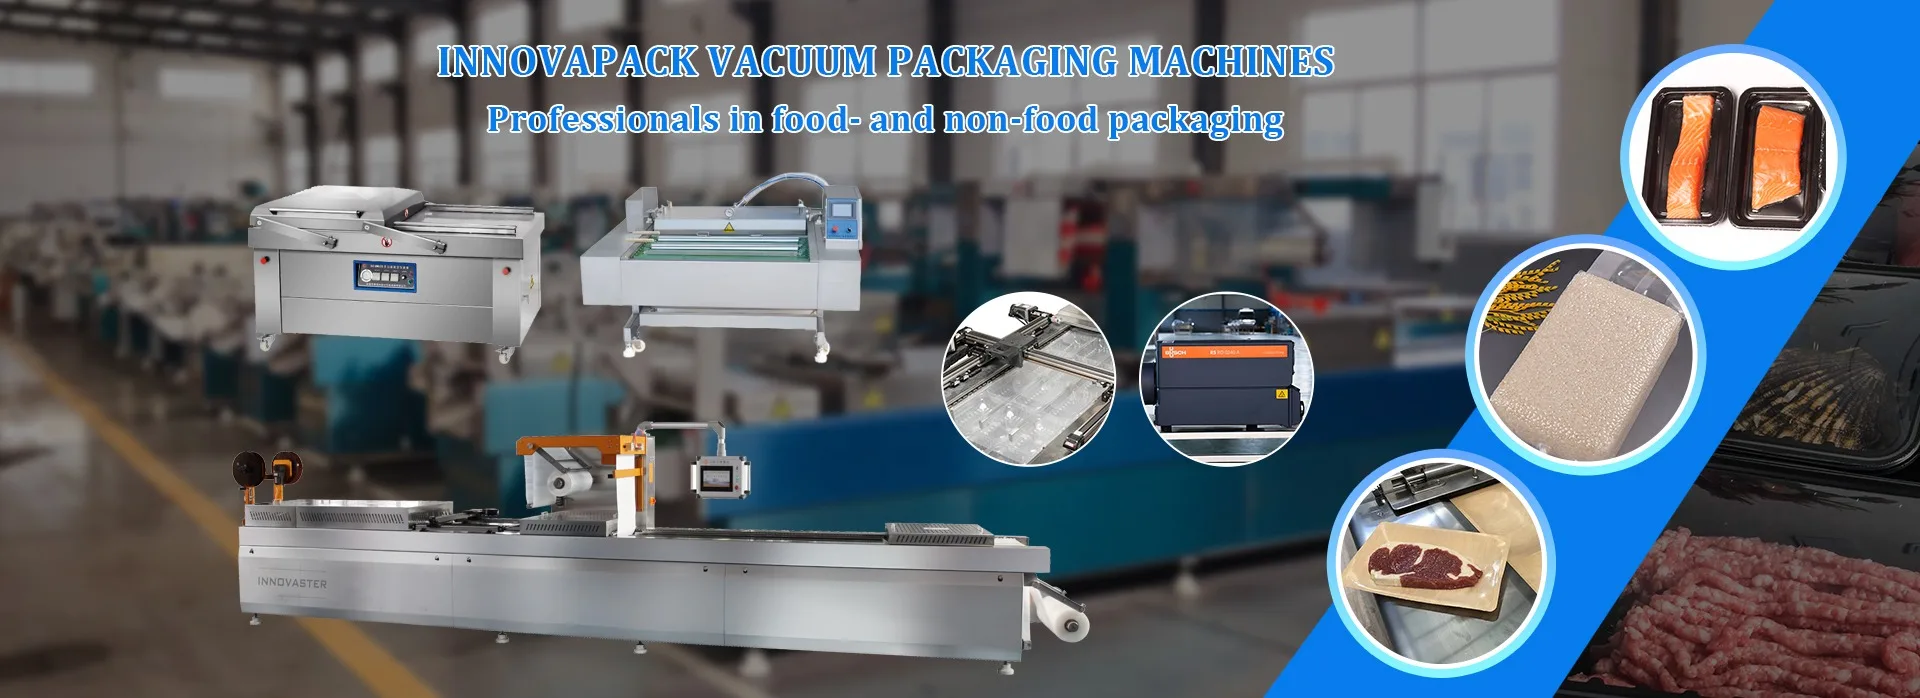 Vacuum packaging machine